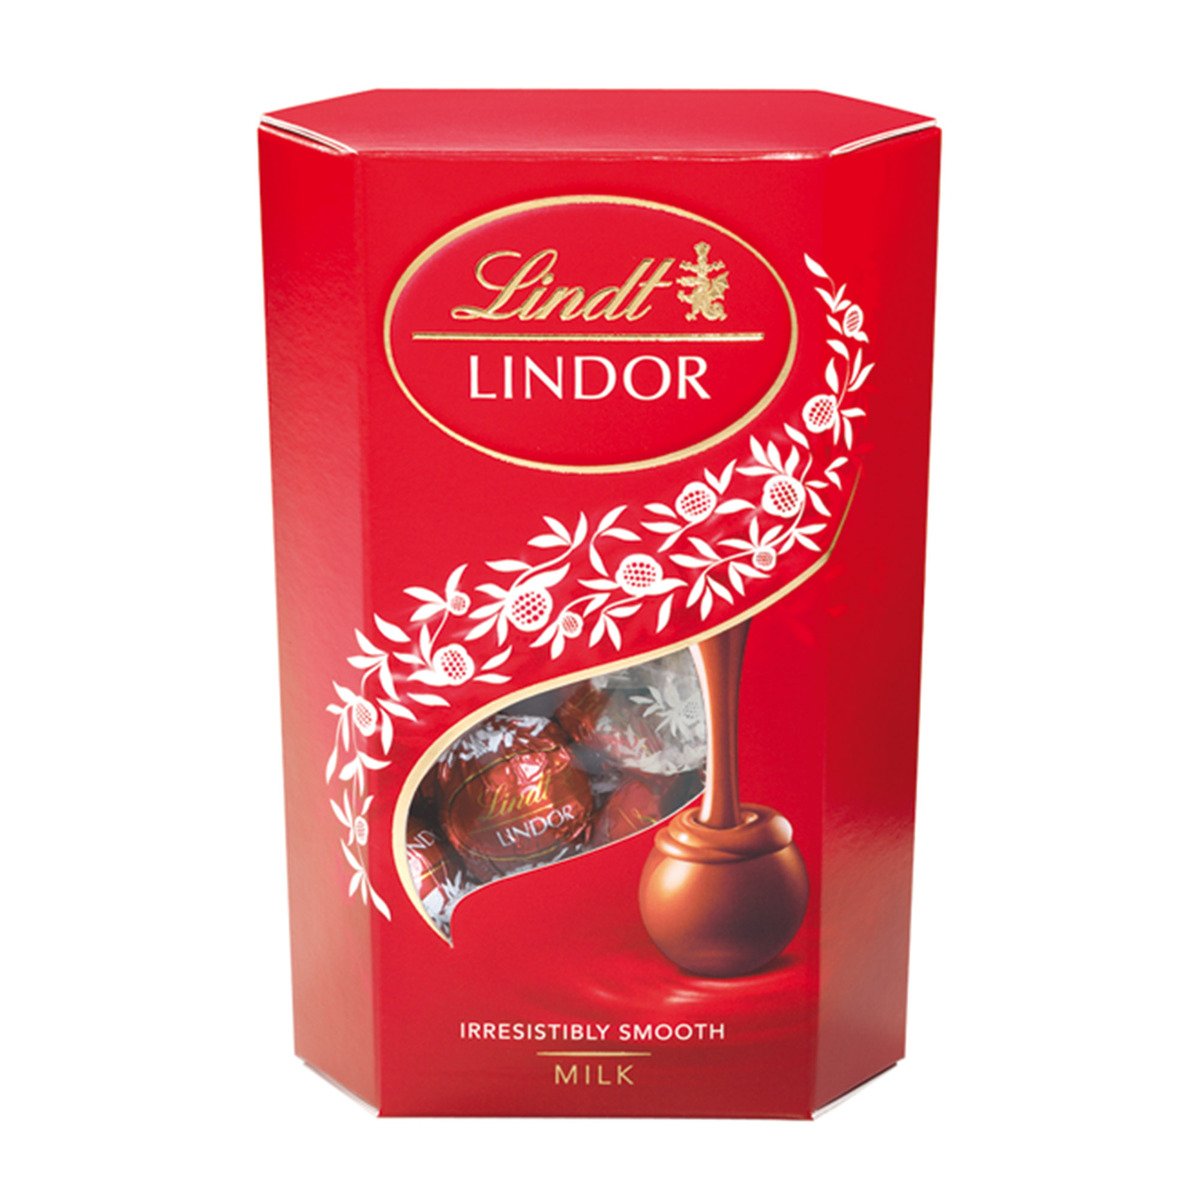 Lindt Lindor Milk Chocolate 500g Online At Best Price Boxed Chocolate Lulu Ksa Price In 1596